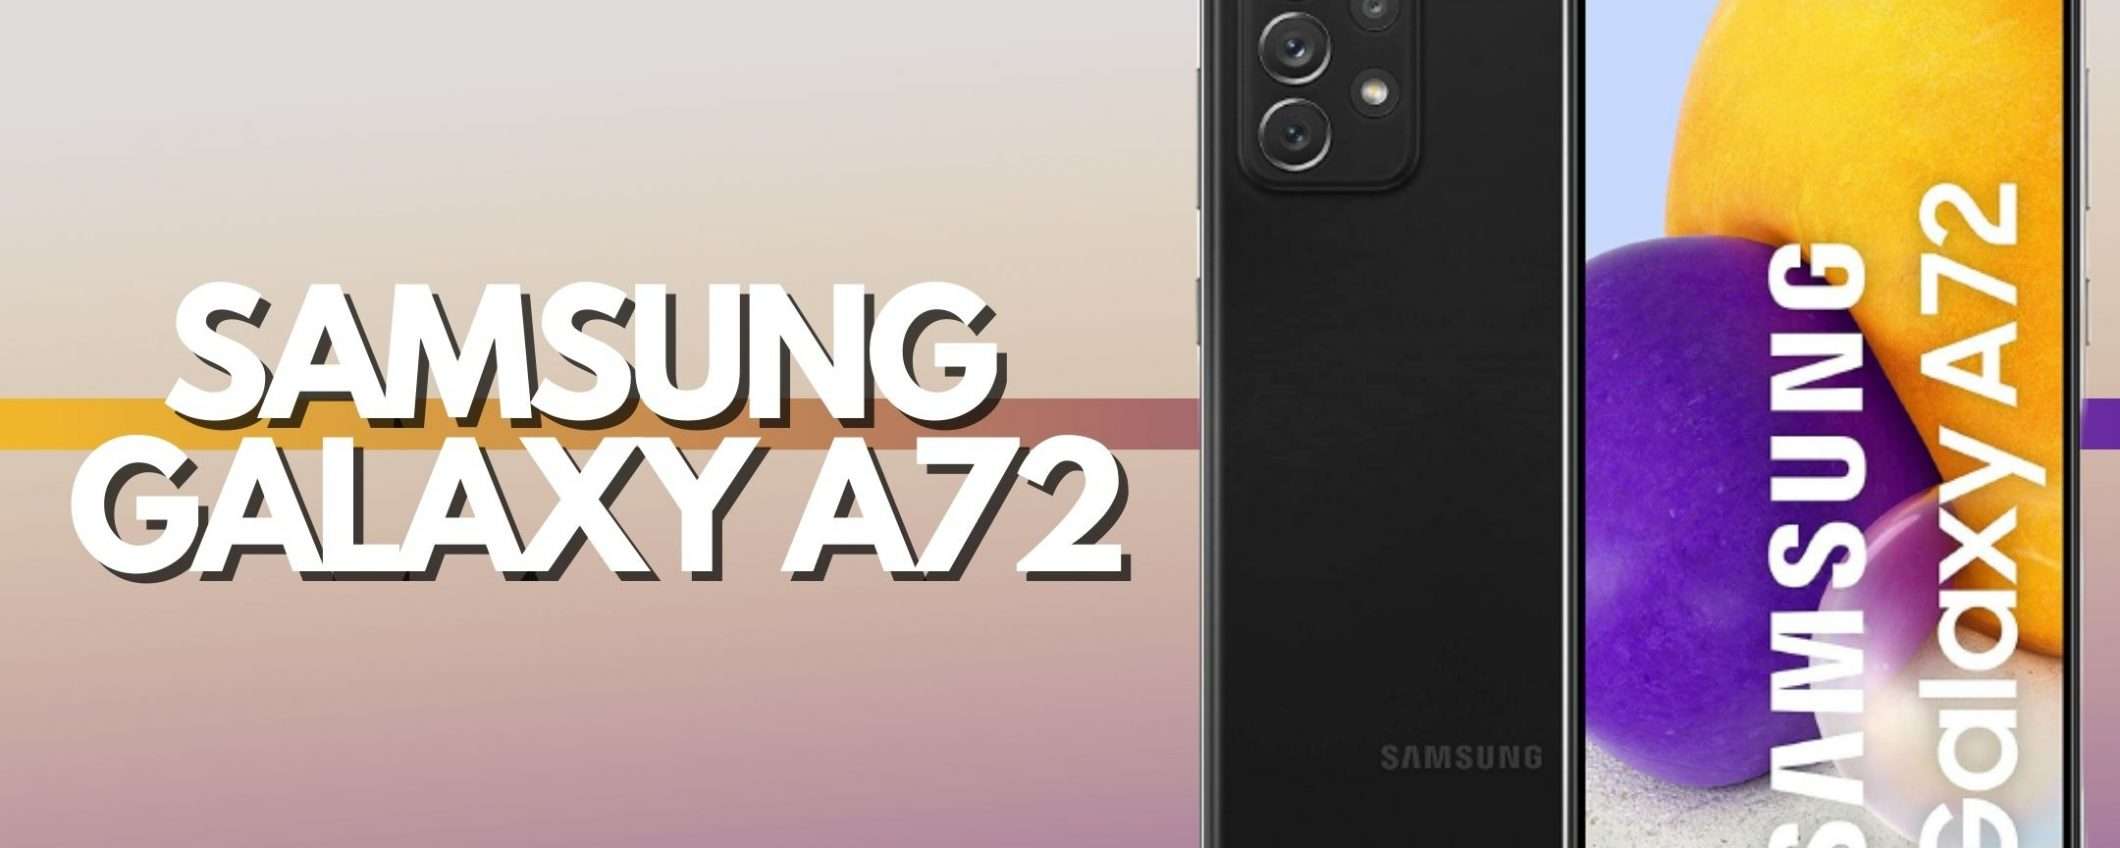 Samsung Galaxy A72: pochi pezzi disponibili (-125€)